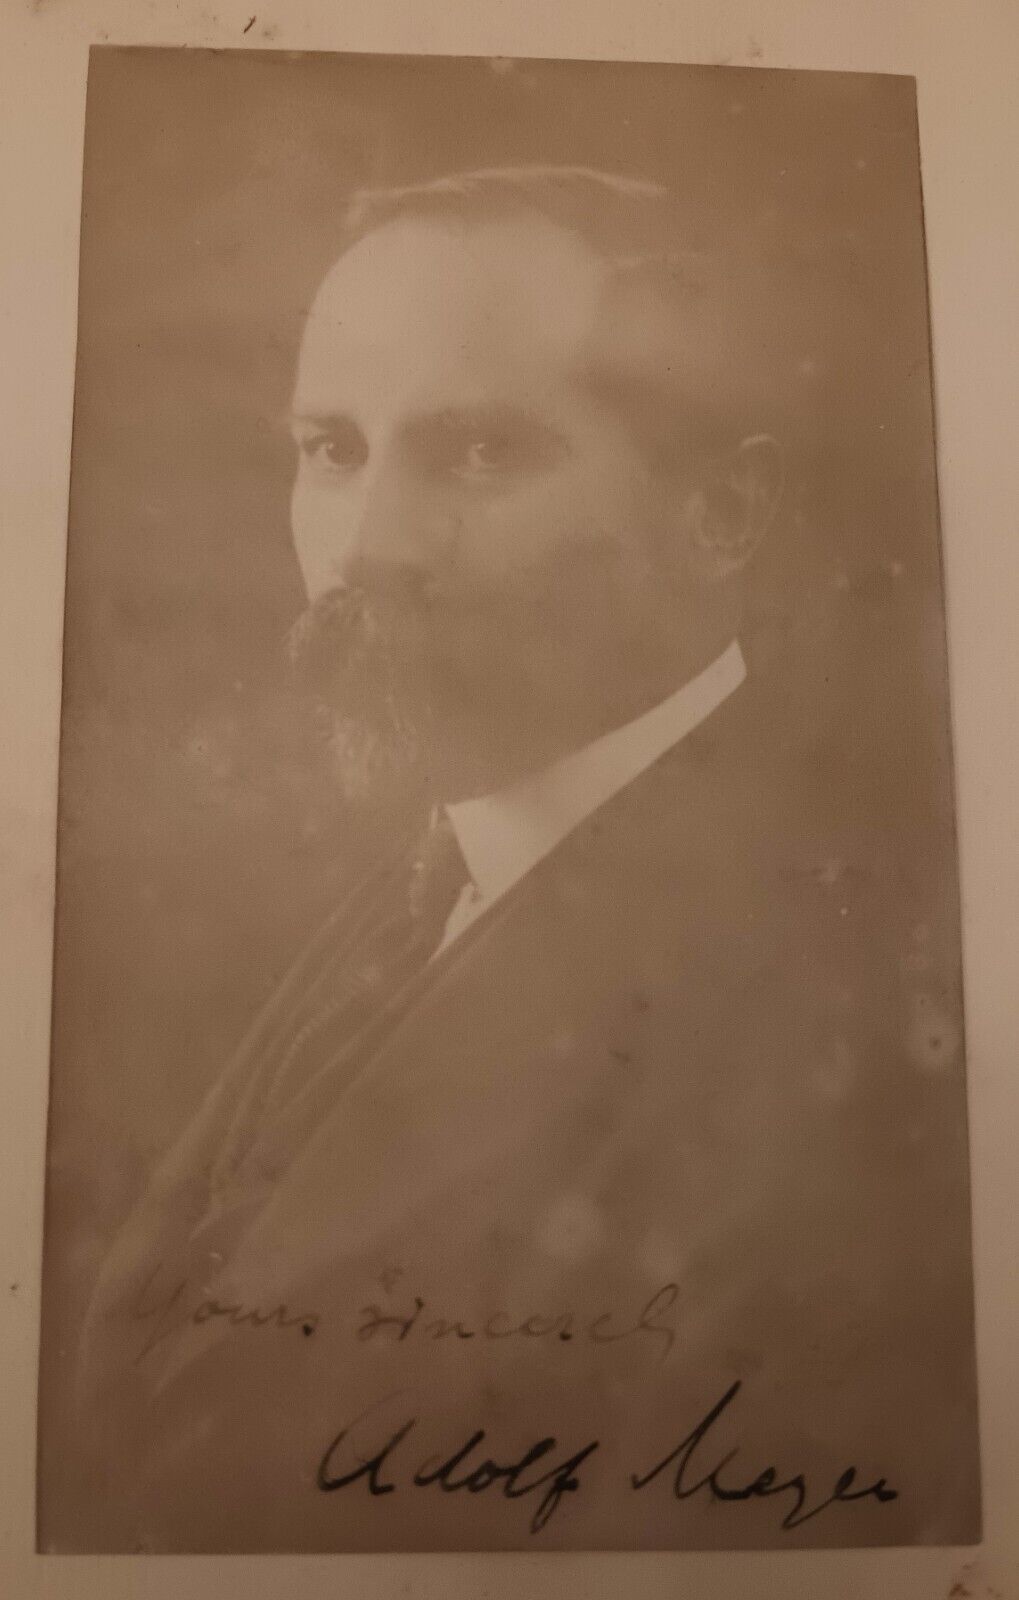 1910 ADOLF MEYER RENOWNED PSYCHIATRIST HAND SIGNED PHOTO AUTOGRAPH JOHNS HOPKINS